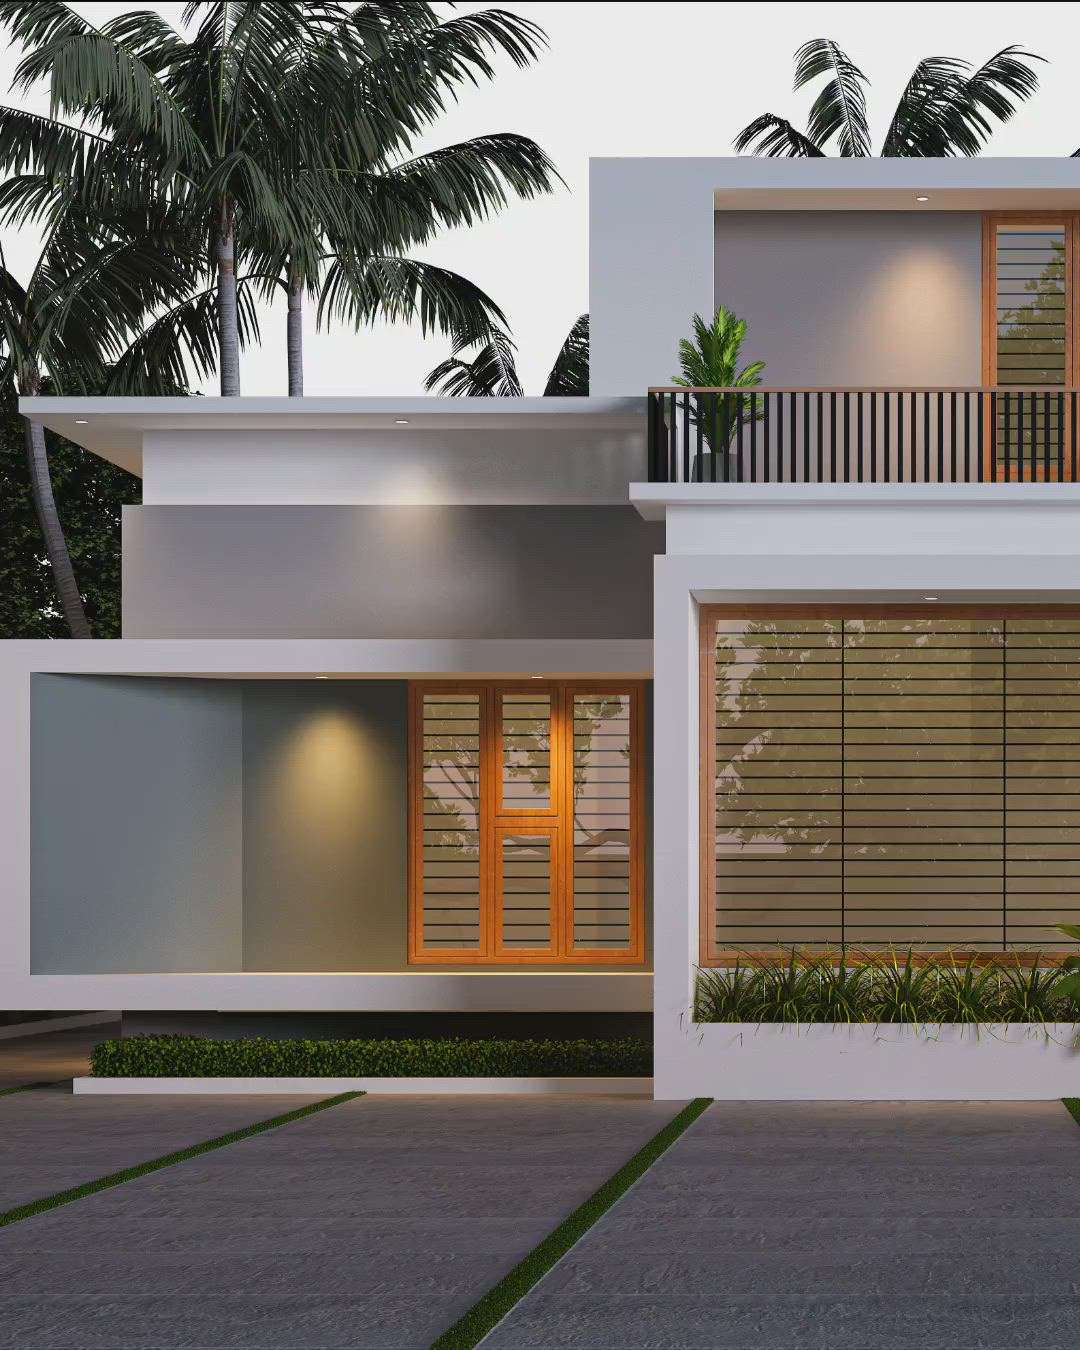 sqft 2 രൂപയ്ക്ക് 3D Design..!

 മനോഹരമായ ക്വാളിറ്റി ഉള്ള 3D ഡിസൈൻ ചെയ്യാൻ ഉടൻ തന്നെ കോൺടാക്ട് ചെയ്യൂ..
contact me : 8606721726 
 #3d  #exteriordesigns #KeralaStyleHouse #ground #modernhouses #HouseDesigns #HouseRenovation  #renovations #exterior3D #ContemporaryHouse